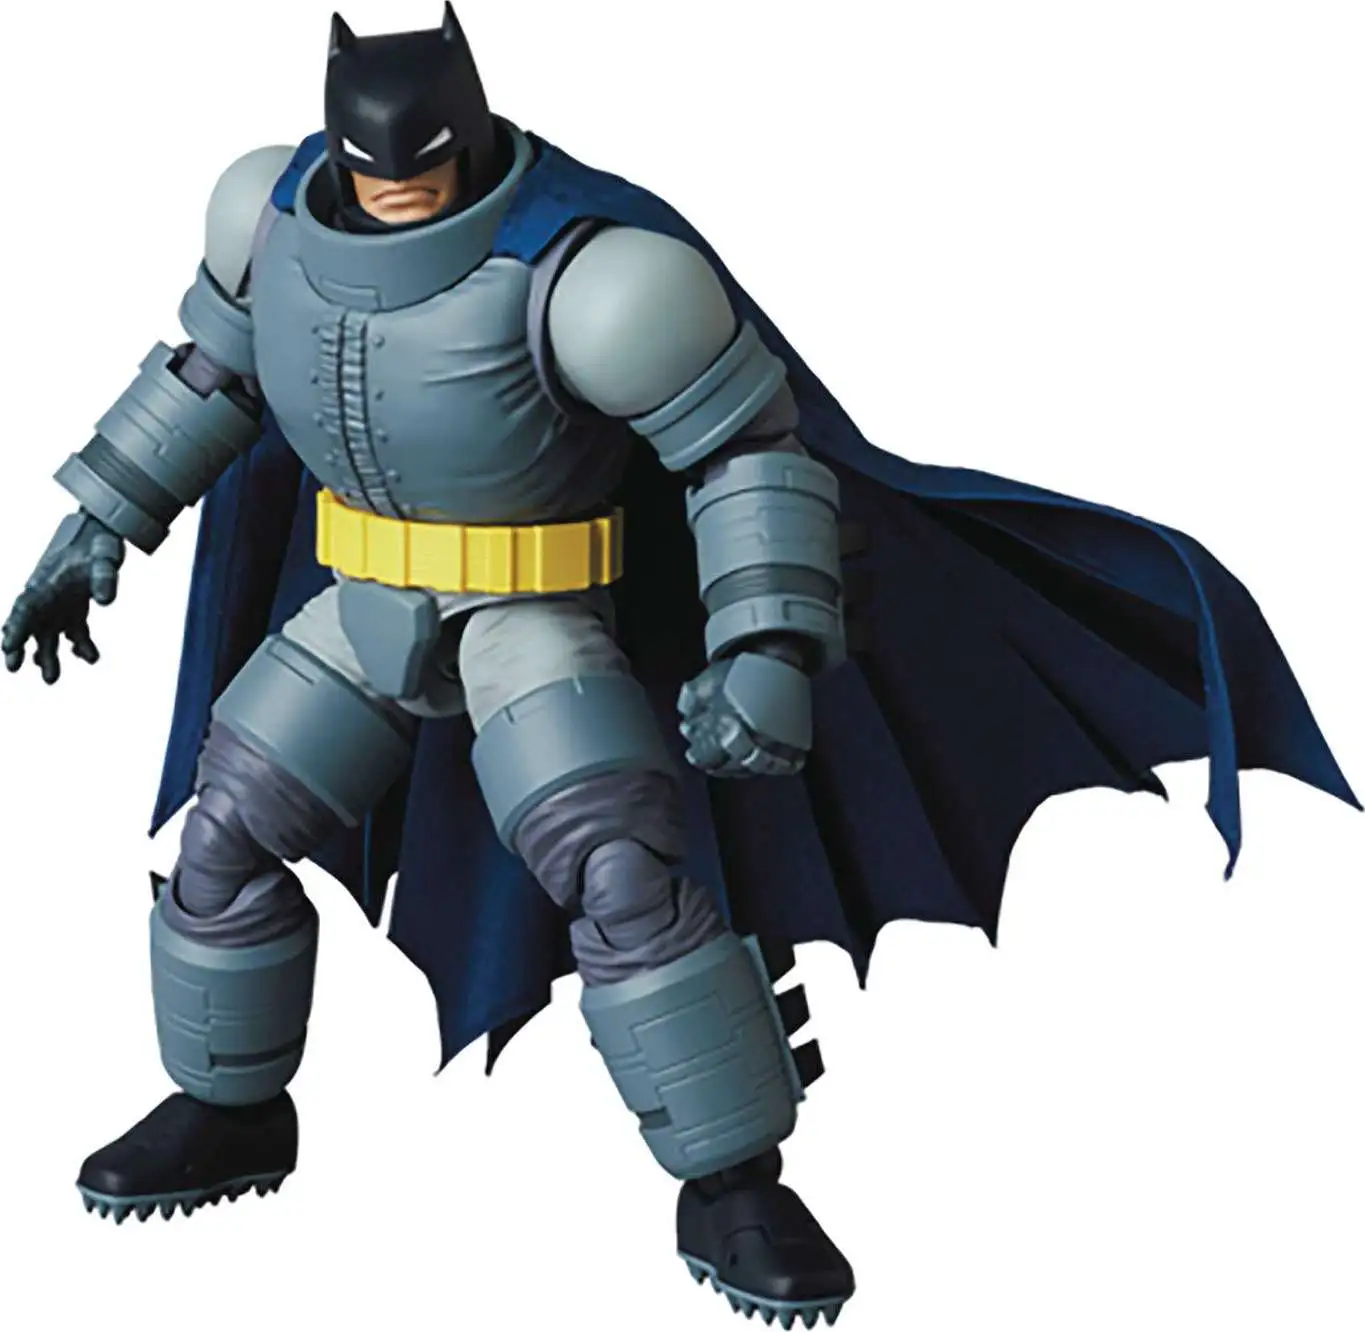 Mafex NO 015 The Joker Dark Knight Model Action Figure Collection Medicom KO Toy 